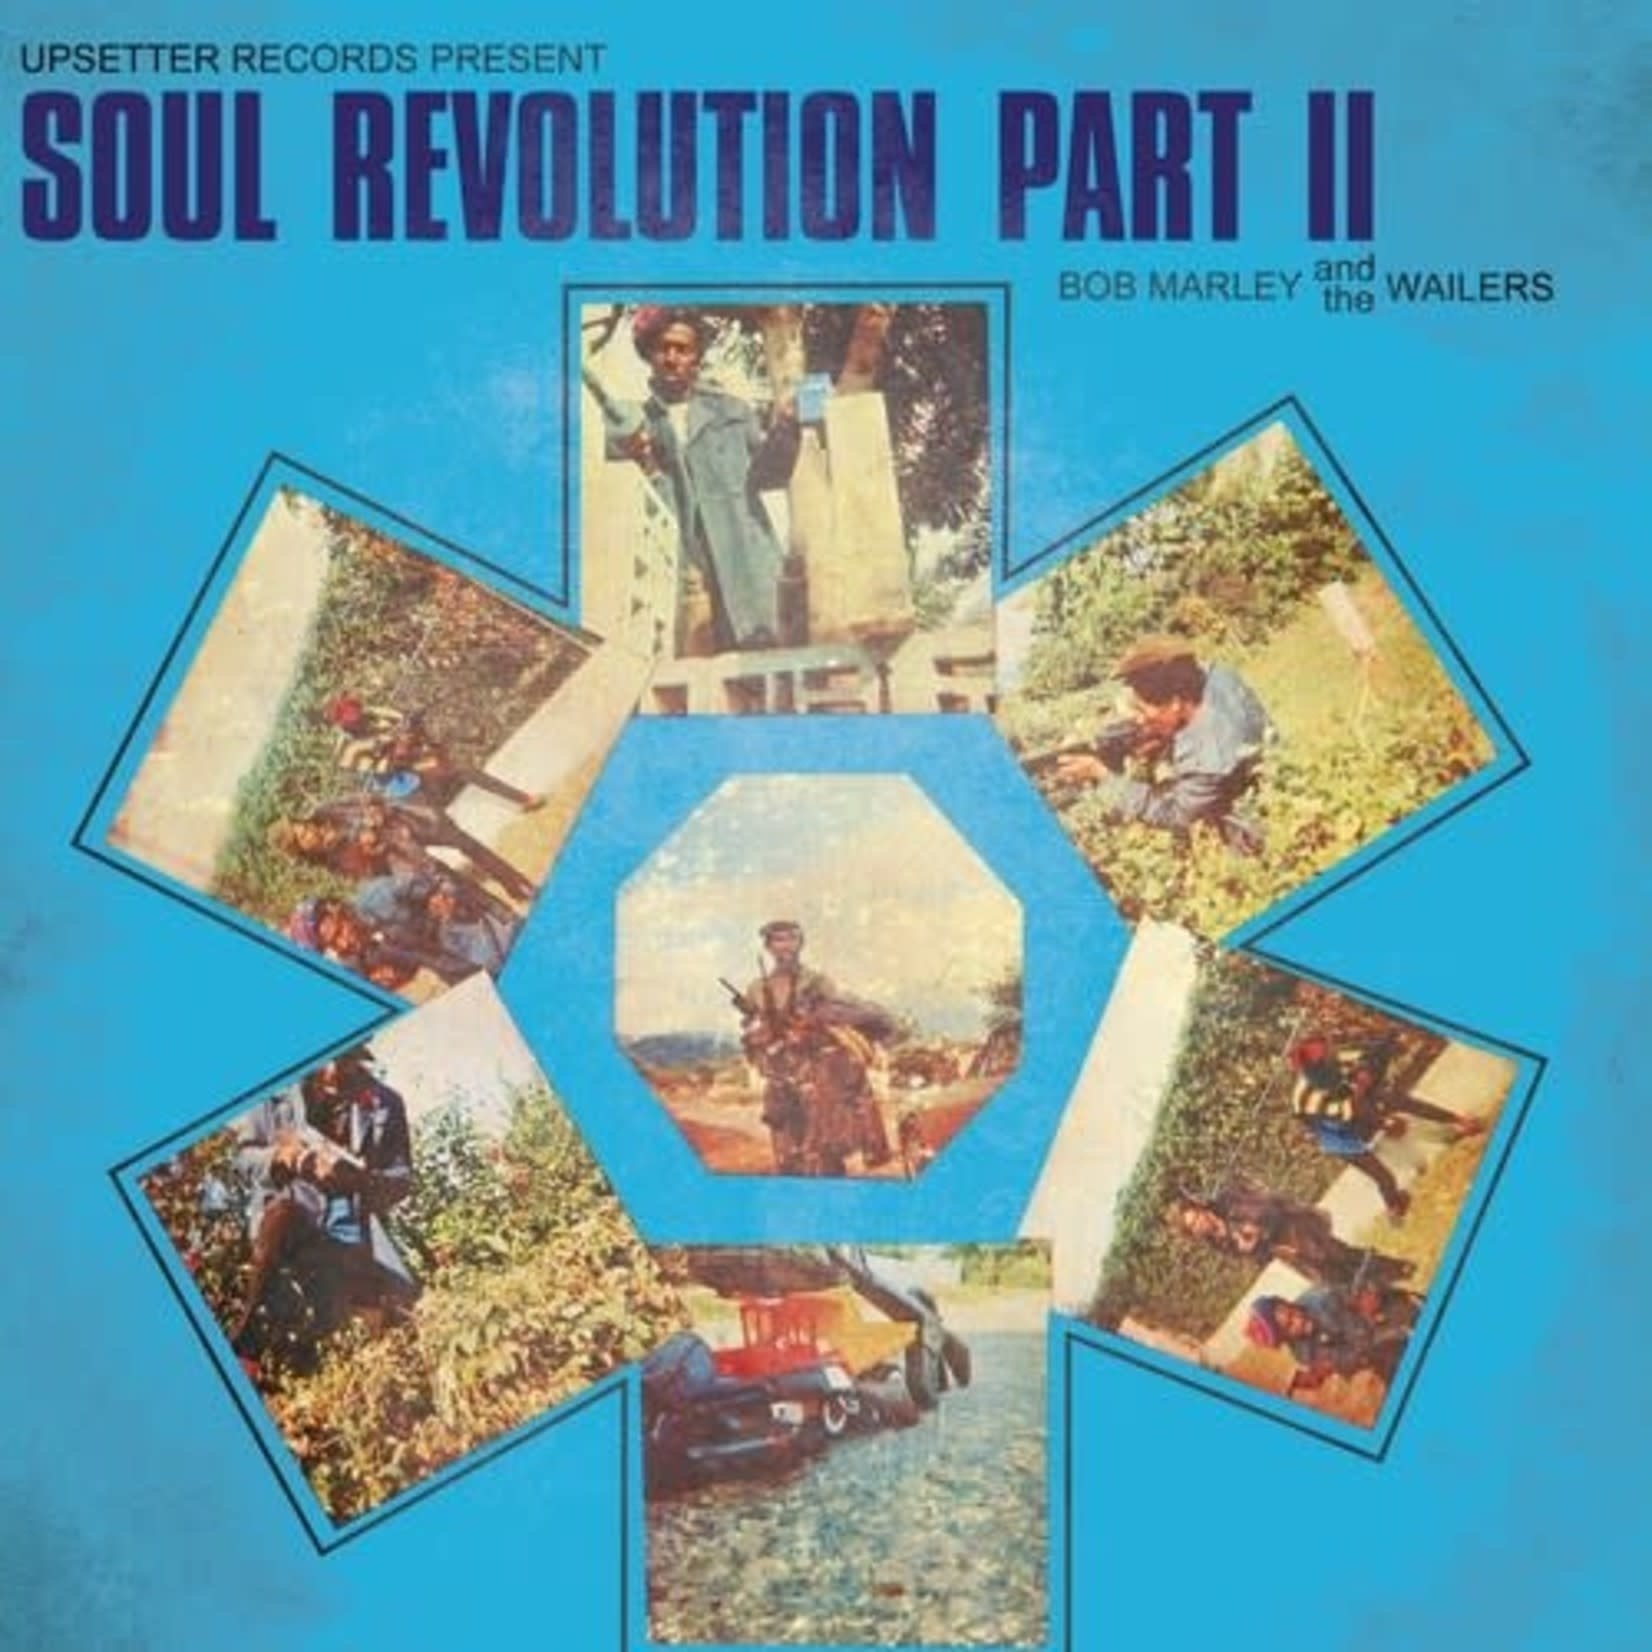 [New] Bob Marley & the Wailers - Soul Revolution Part II (yellow vinyl)